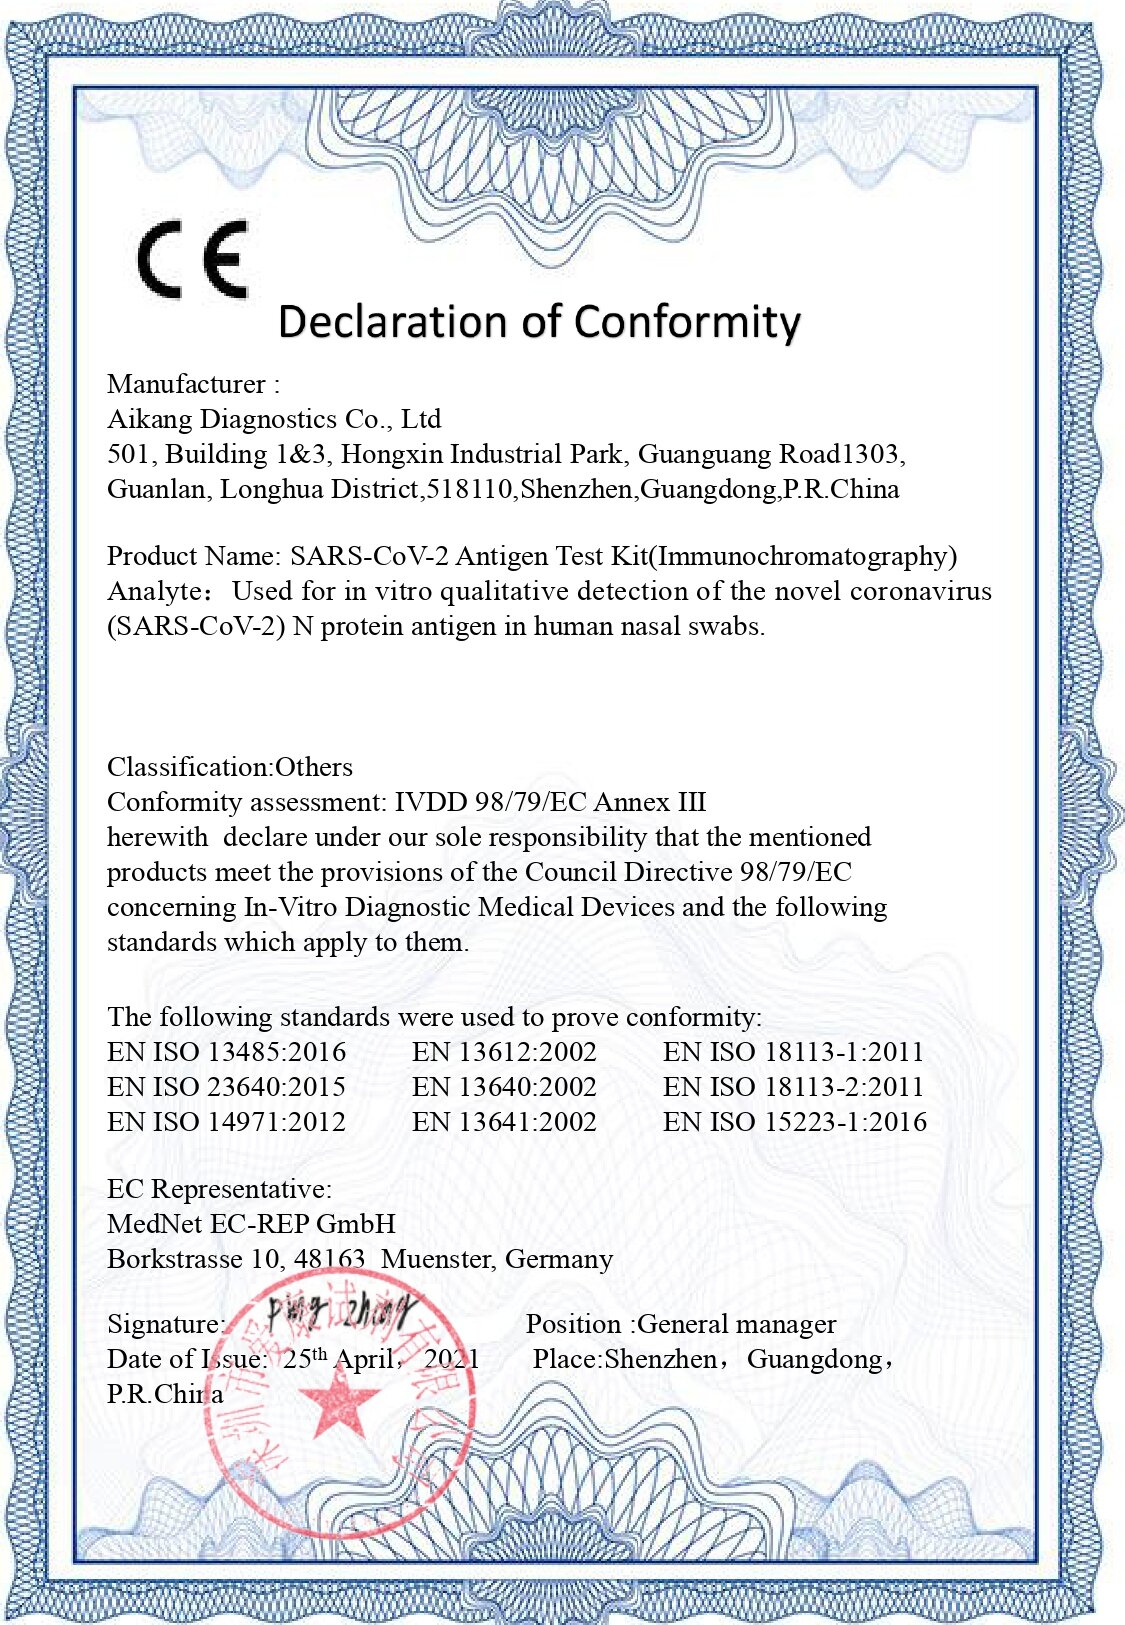 Aikang Covid-19 Antigen Test Kit-Certificate